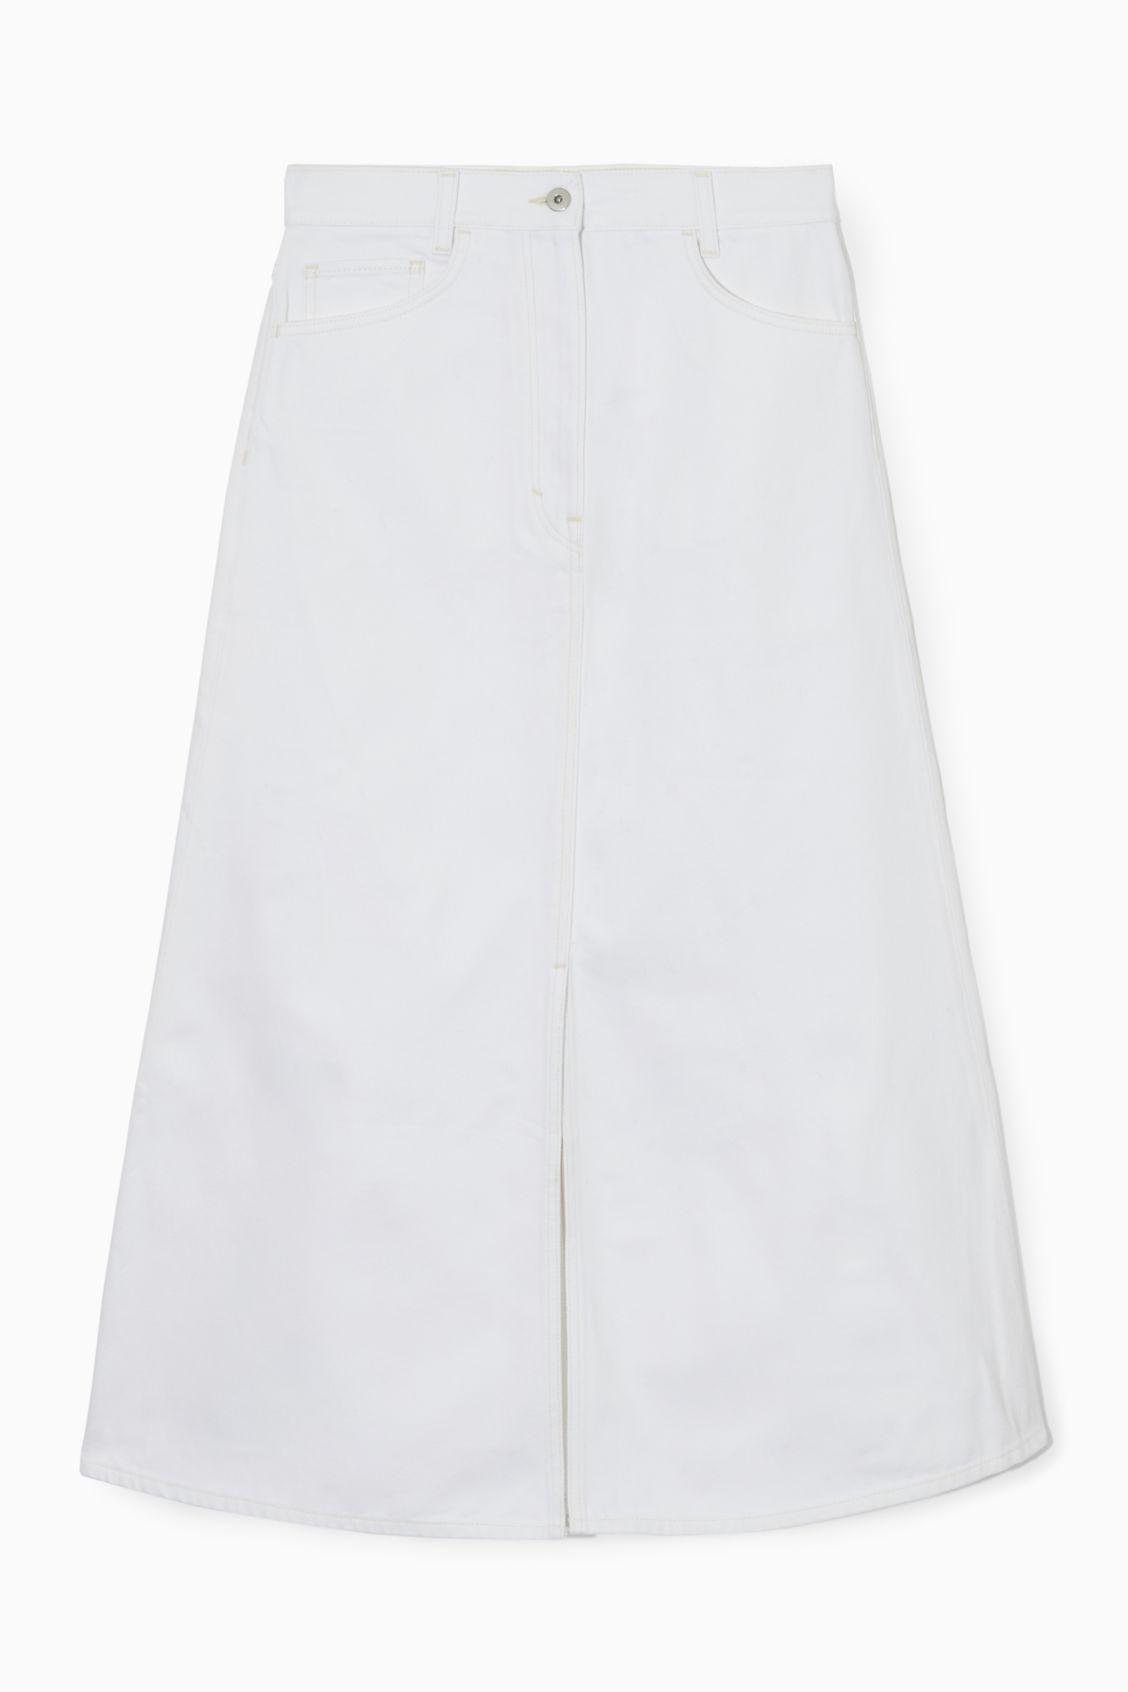 COS A-line Denim Midi Skirt in White | Lyst